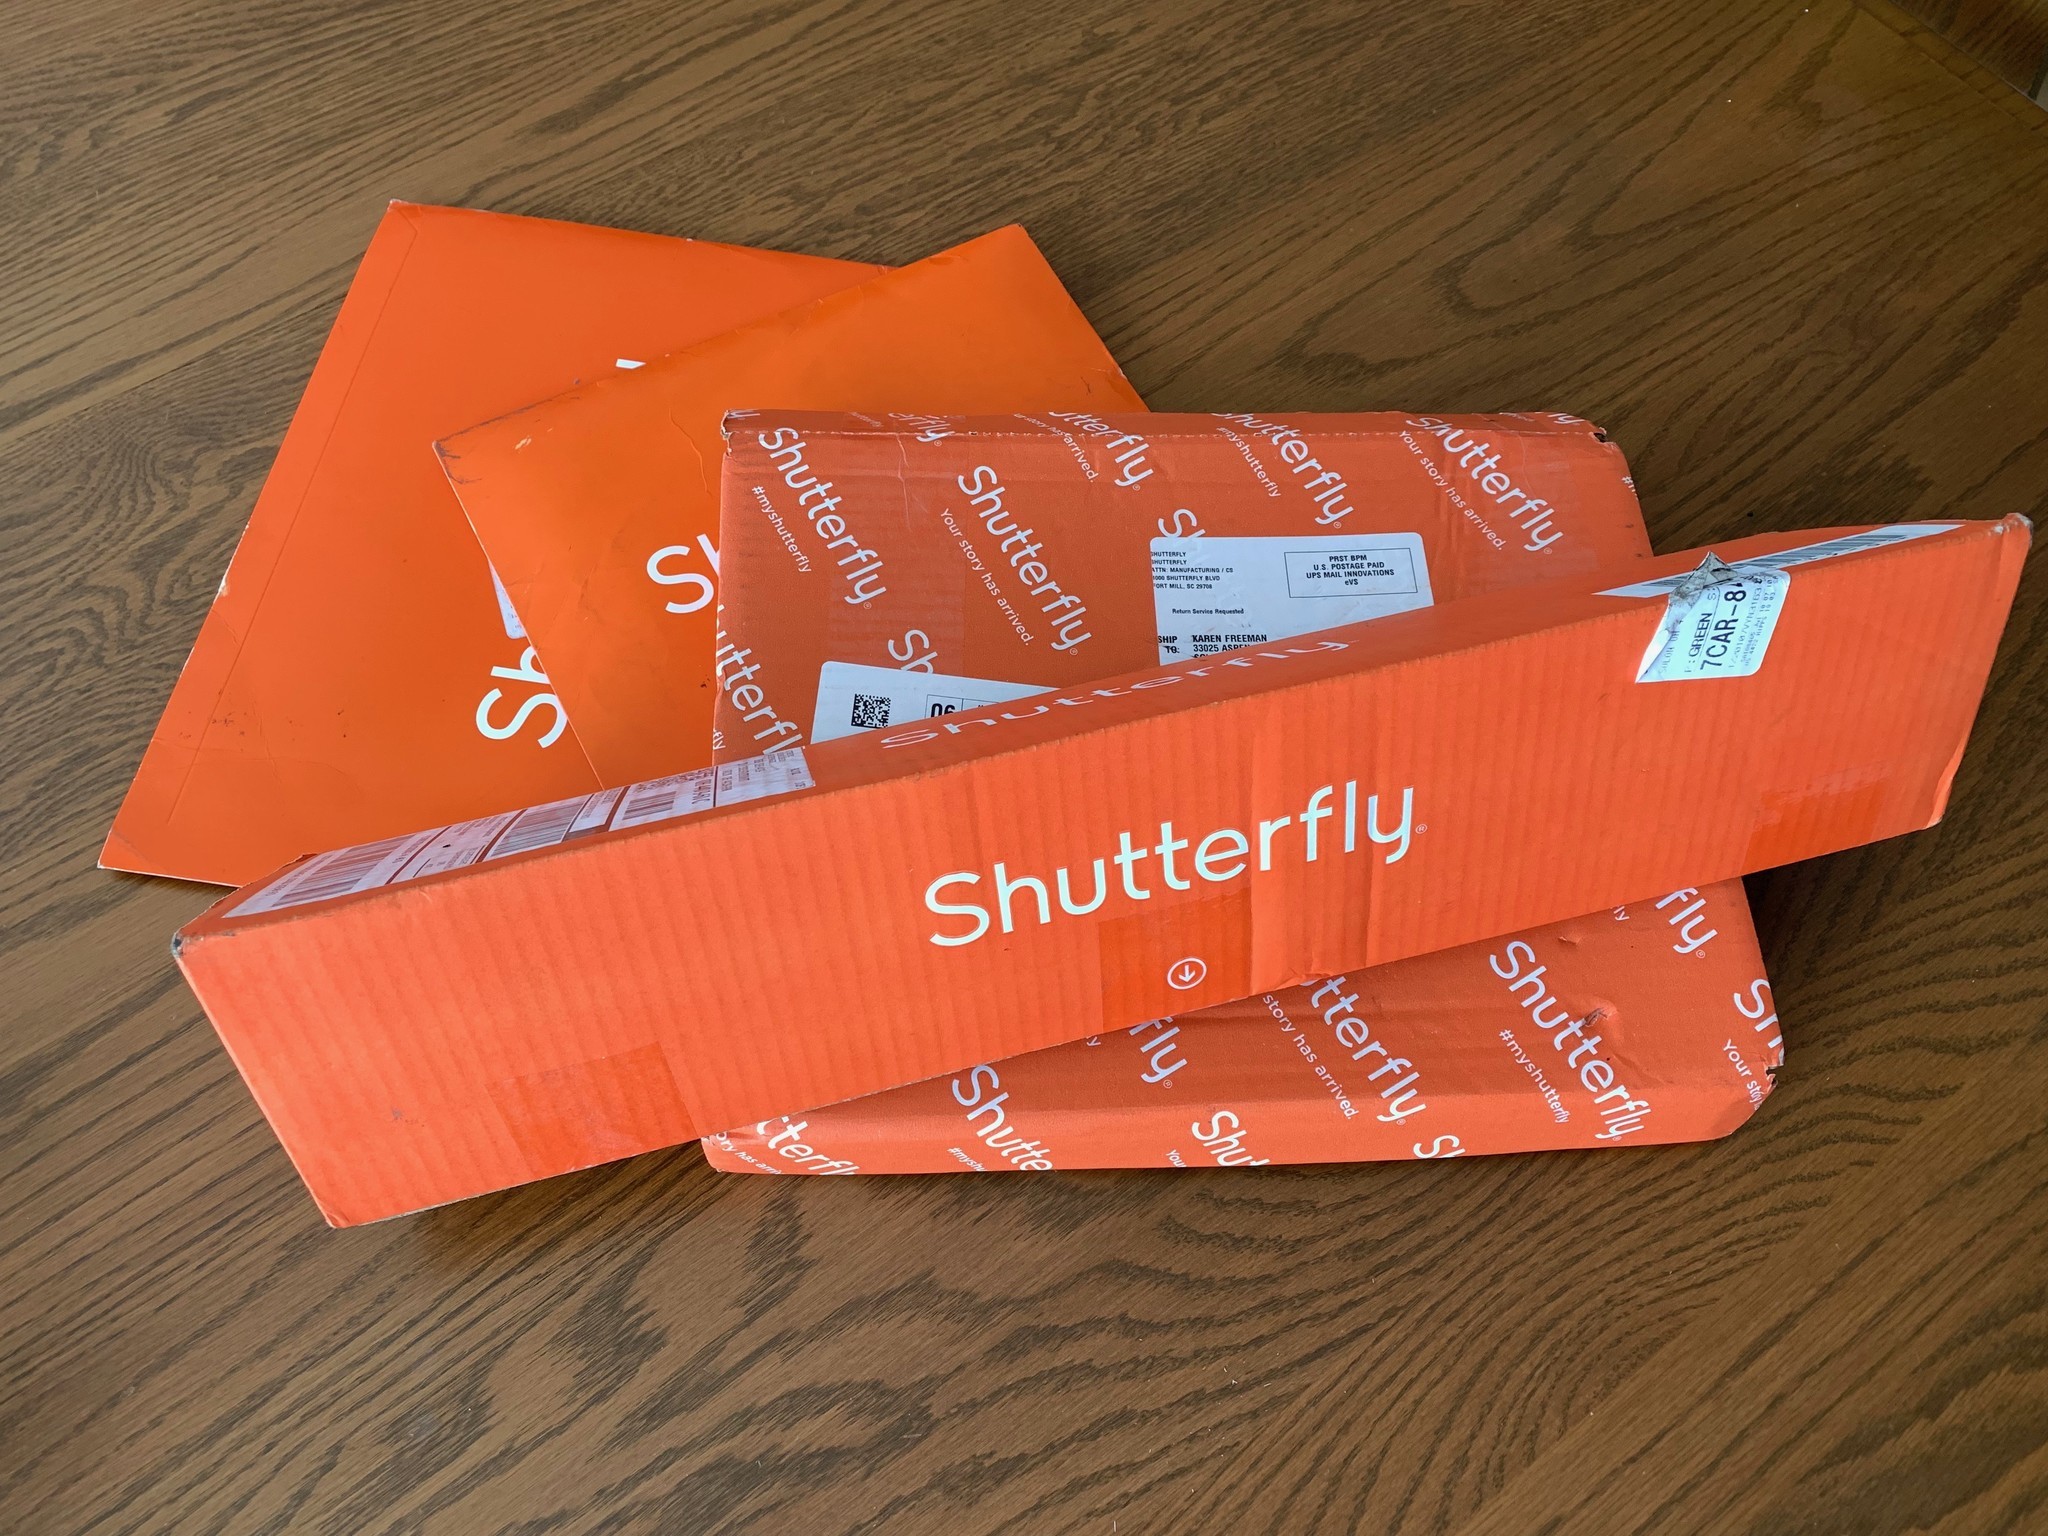 Shutterfly shipping packaging